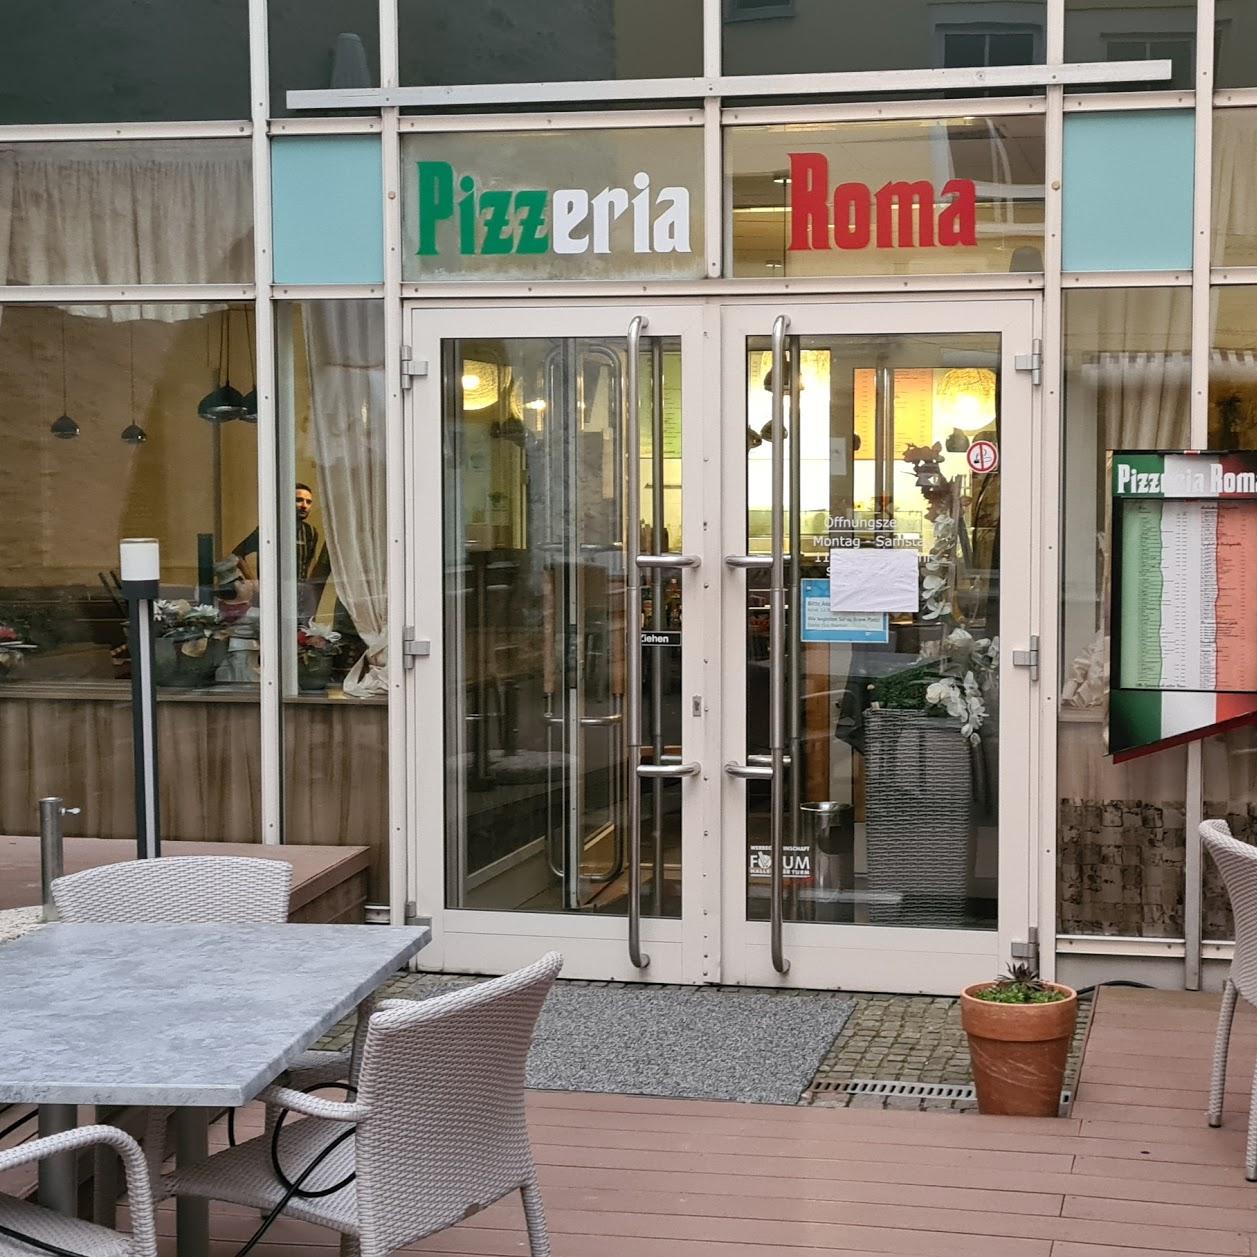 Restaurant "Pizzeria Roma" in Köthen (Anhalt)